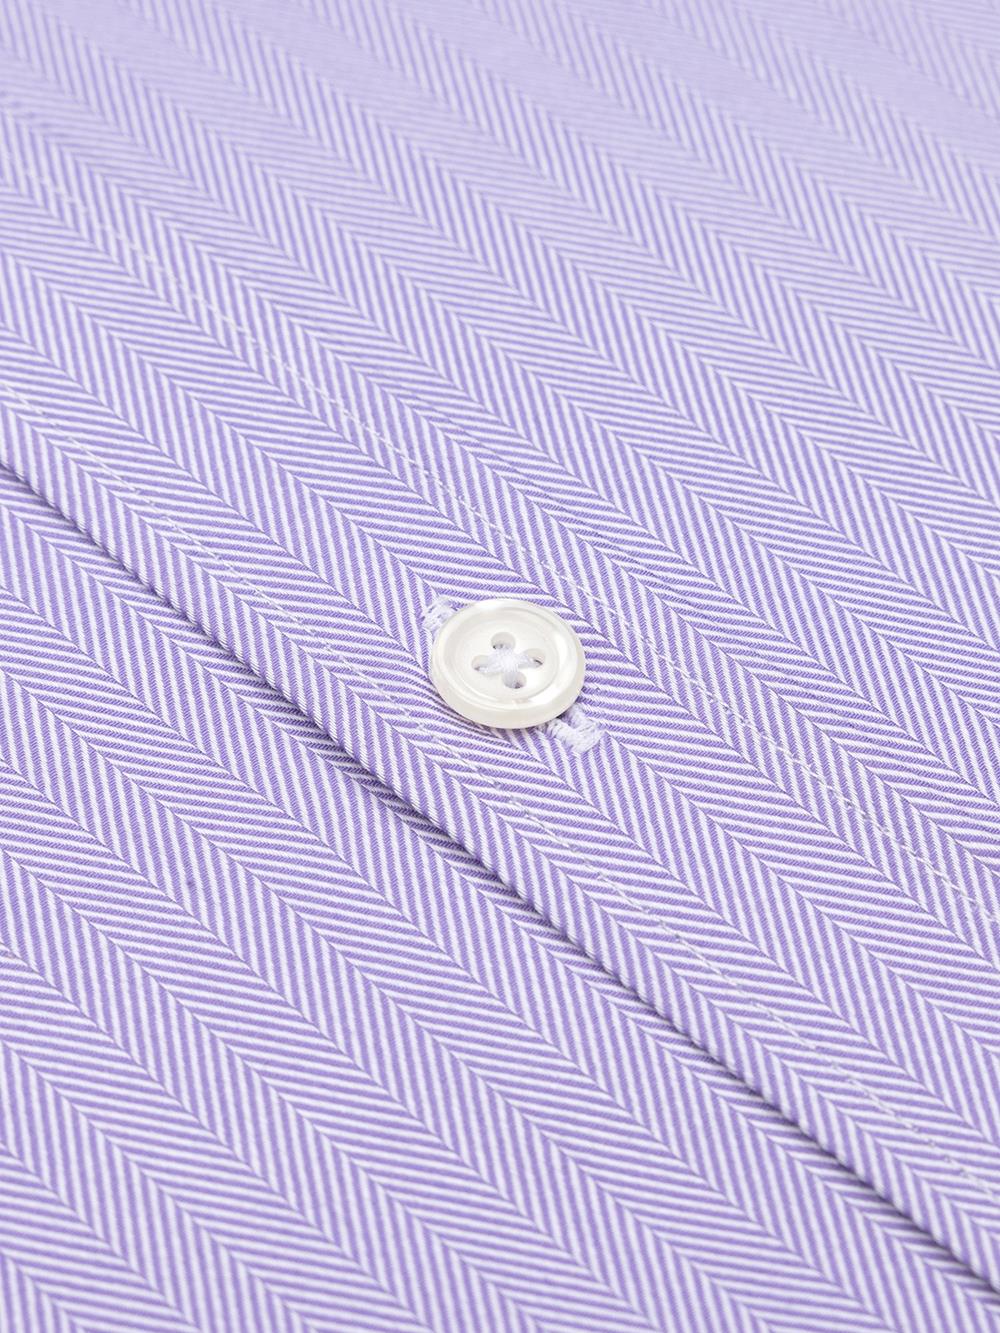 Parma Herringbone short sleeves shirt - Button down collar